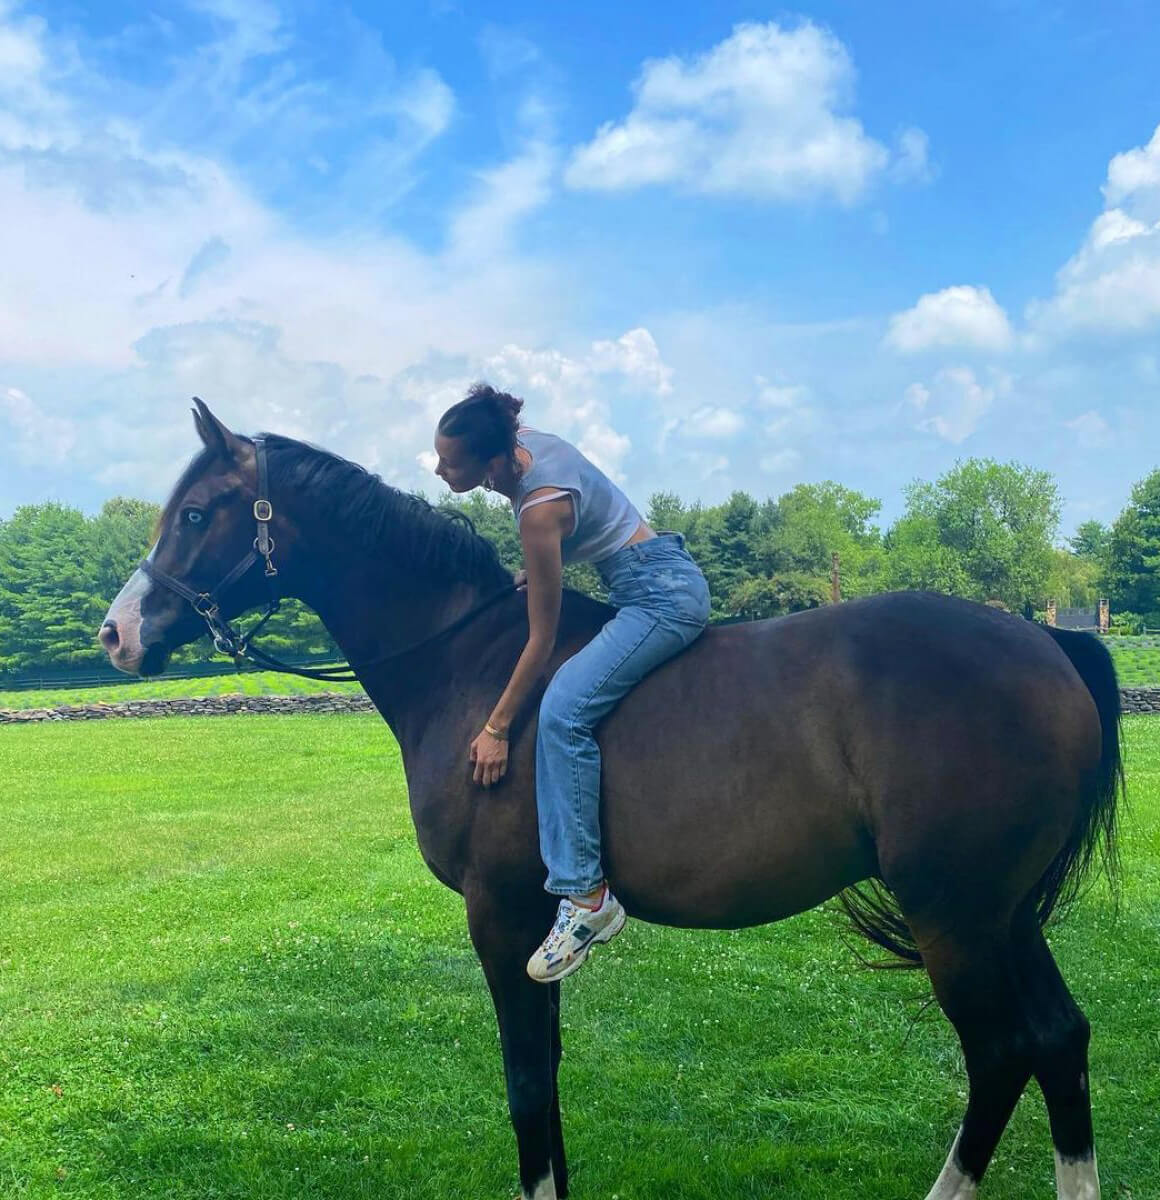 Bella Hadid Riding a Horse - Instagram Photos 12/01/2020 1